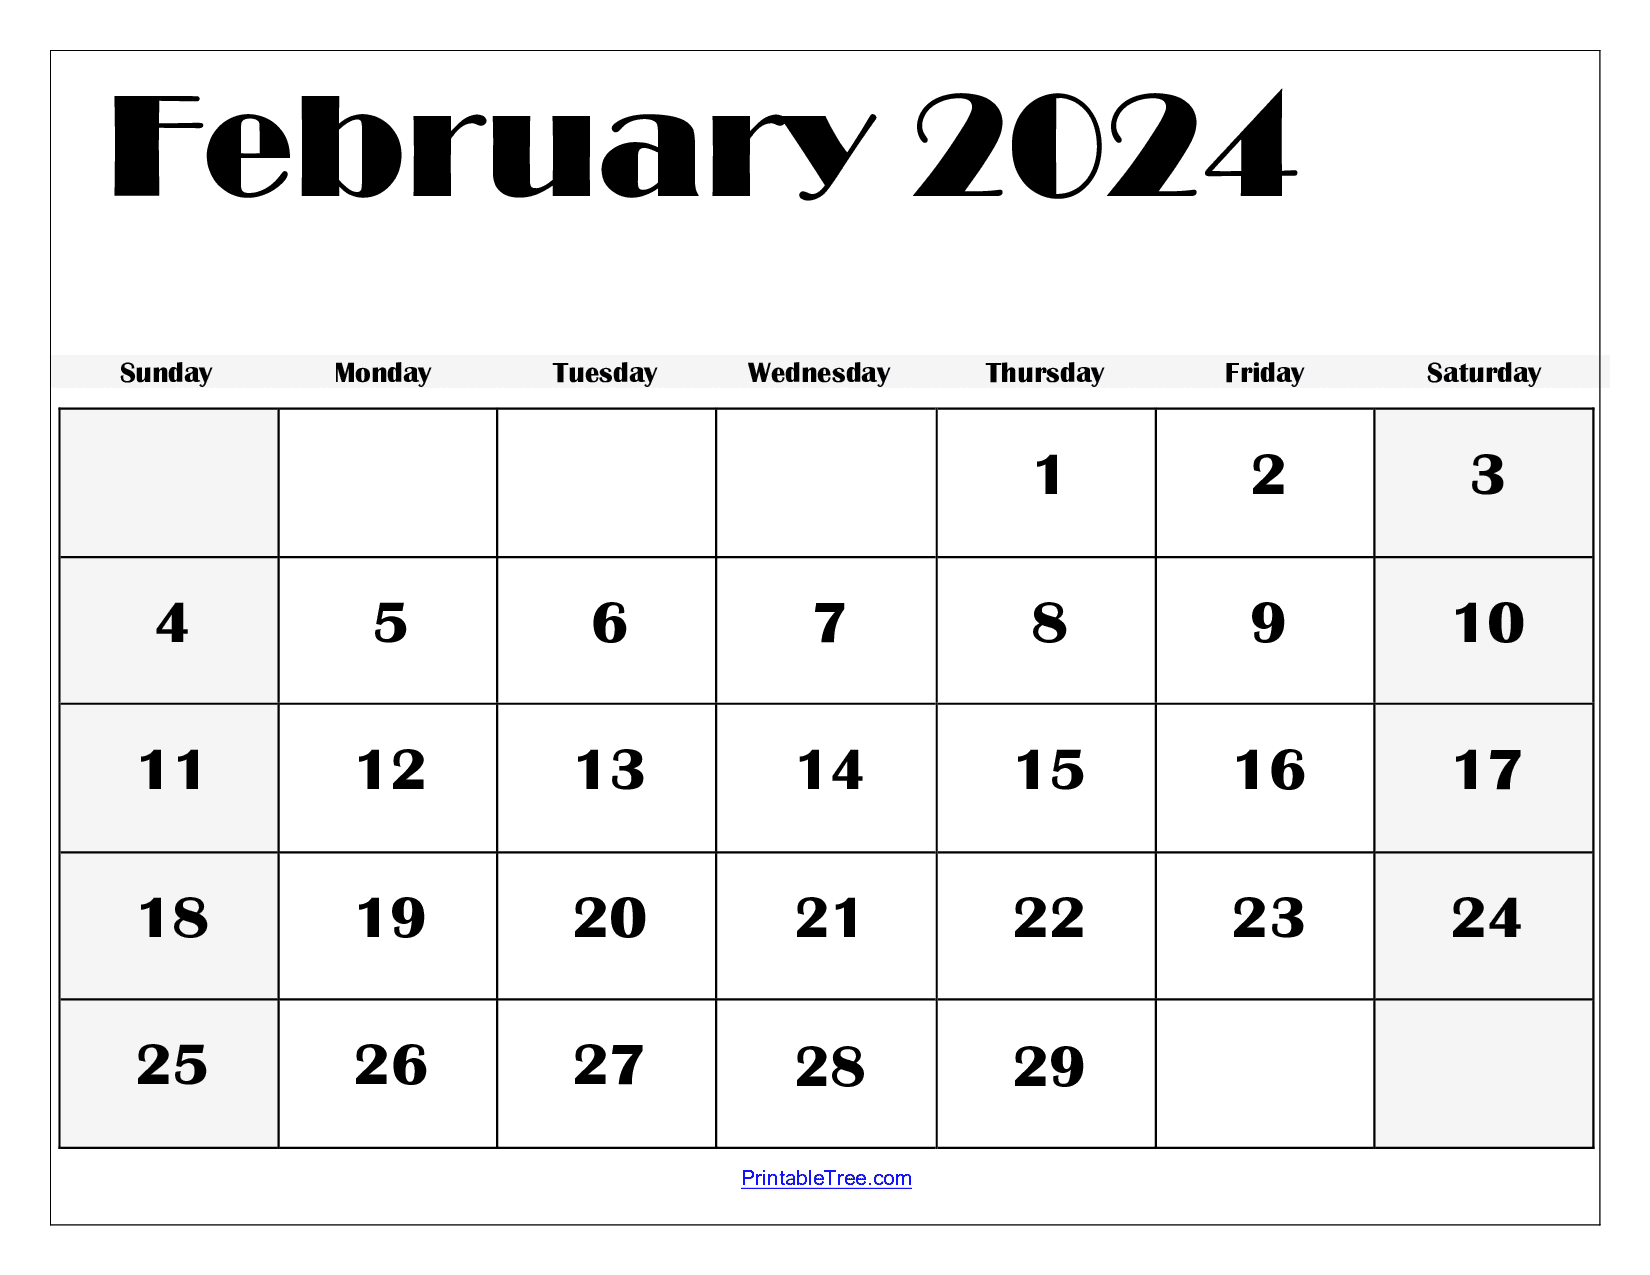 February 2024 Calendar Printable Pdf Template With Holidays for Blank Calendar Printable February 2024